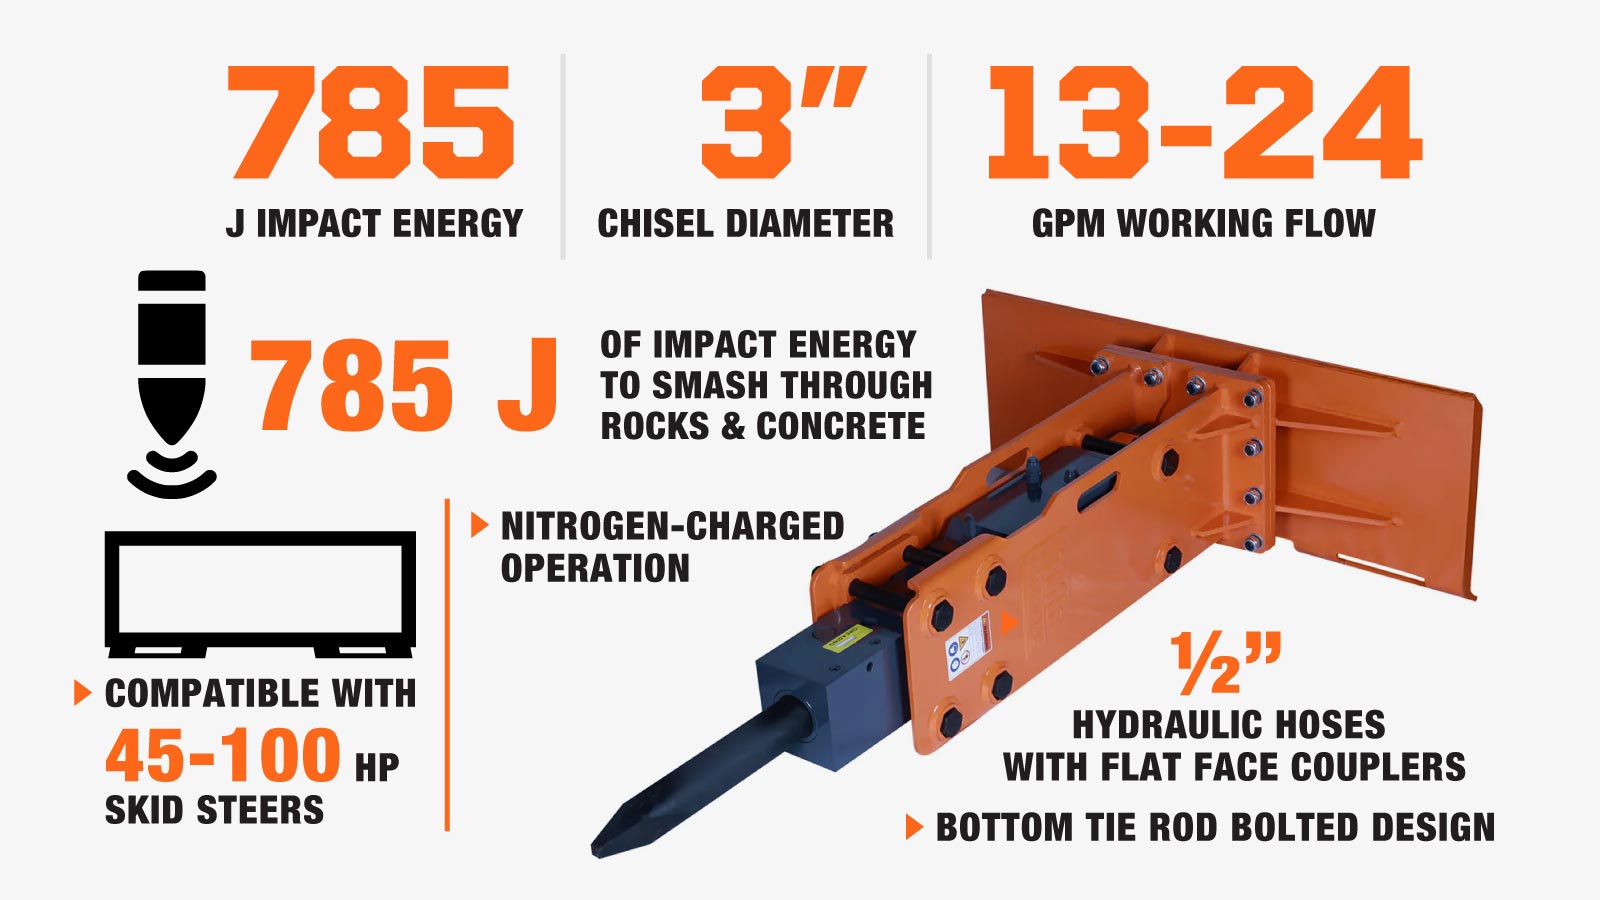 TMG Industrial 45-100 HP Skid Steer Hydraulic Hammer Breaker, 3” Moil Point Chisel, 785 J Impact Energy, Universal Mount, TMG-HB90S-description-image